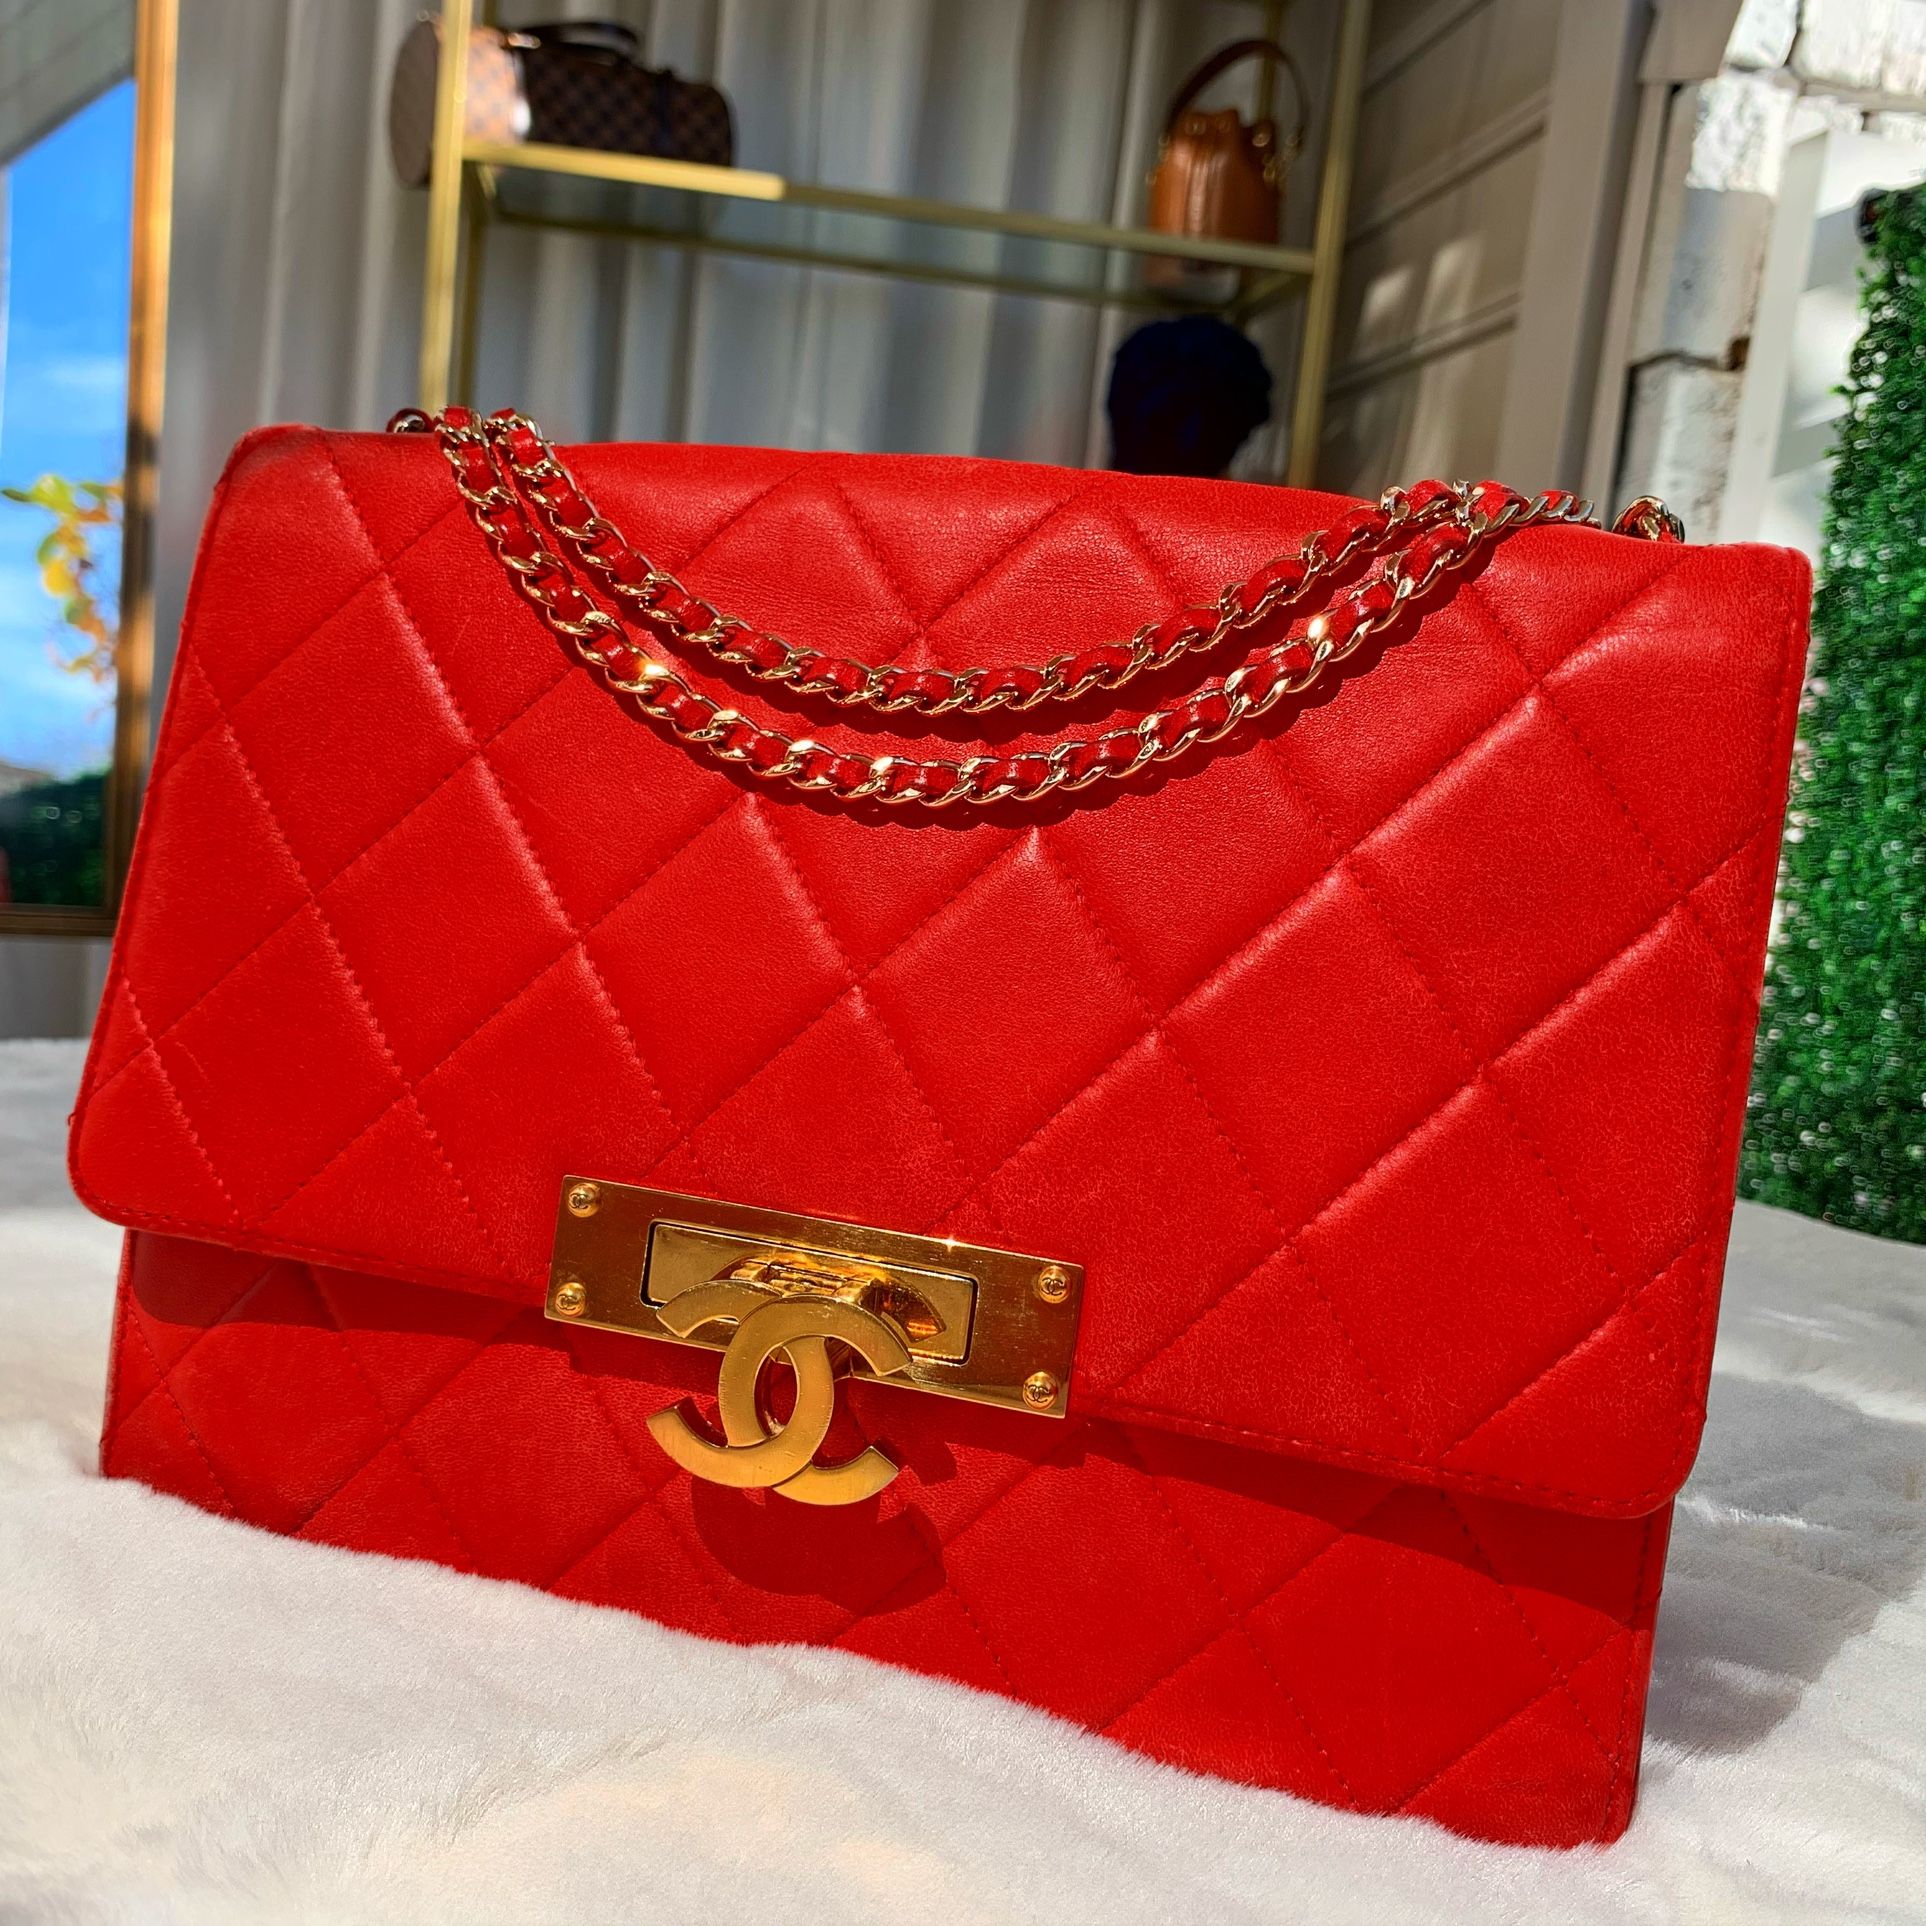 Chanel Gold Class Double CC Handbag